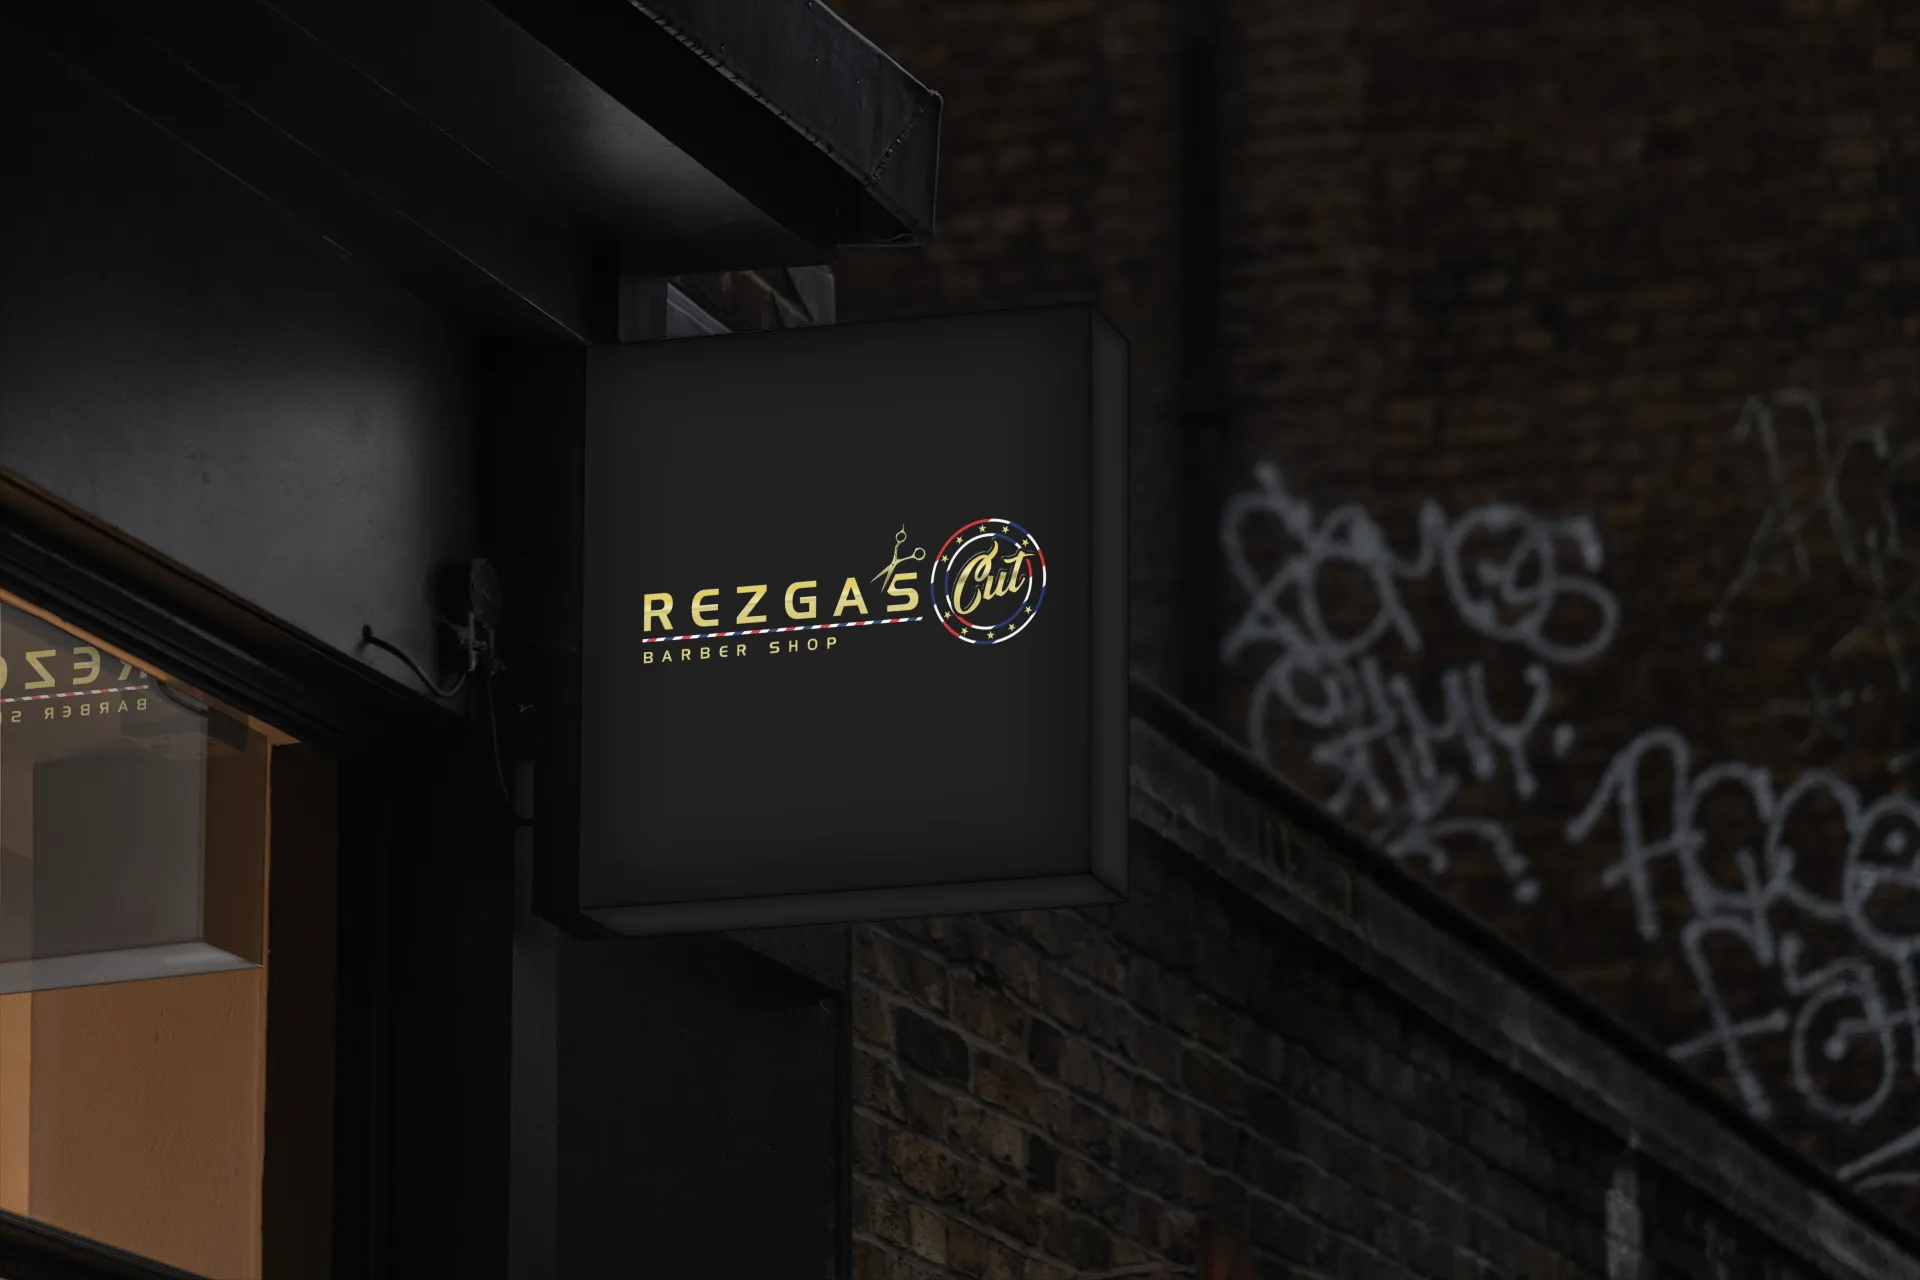 Rezga's Cut side shop sign